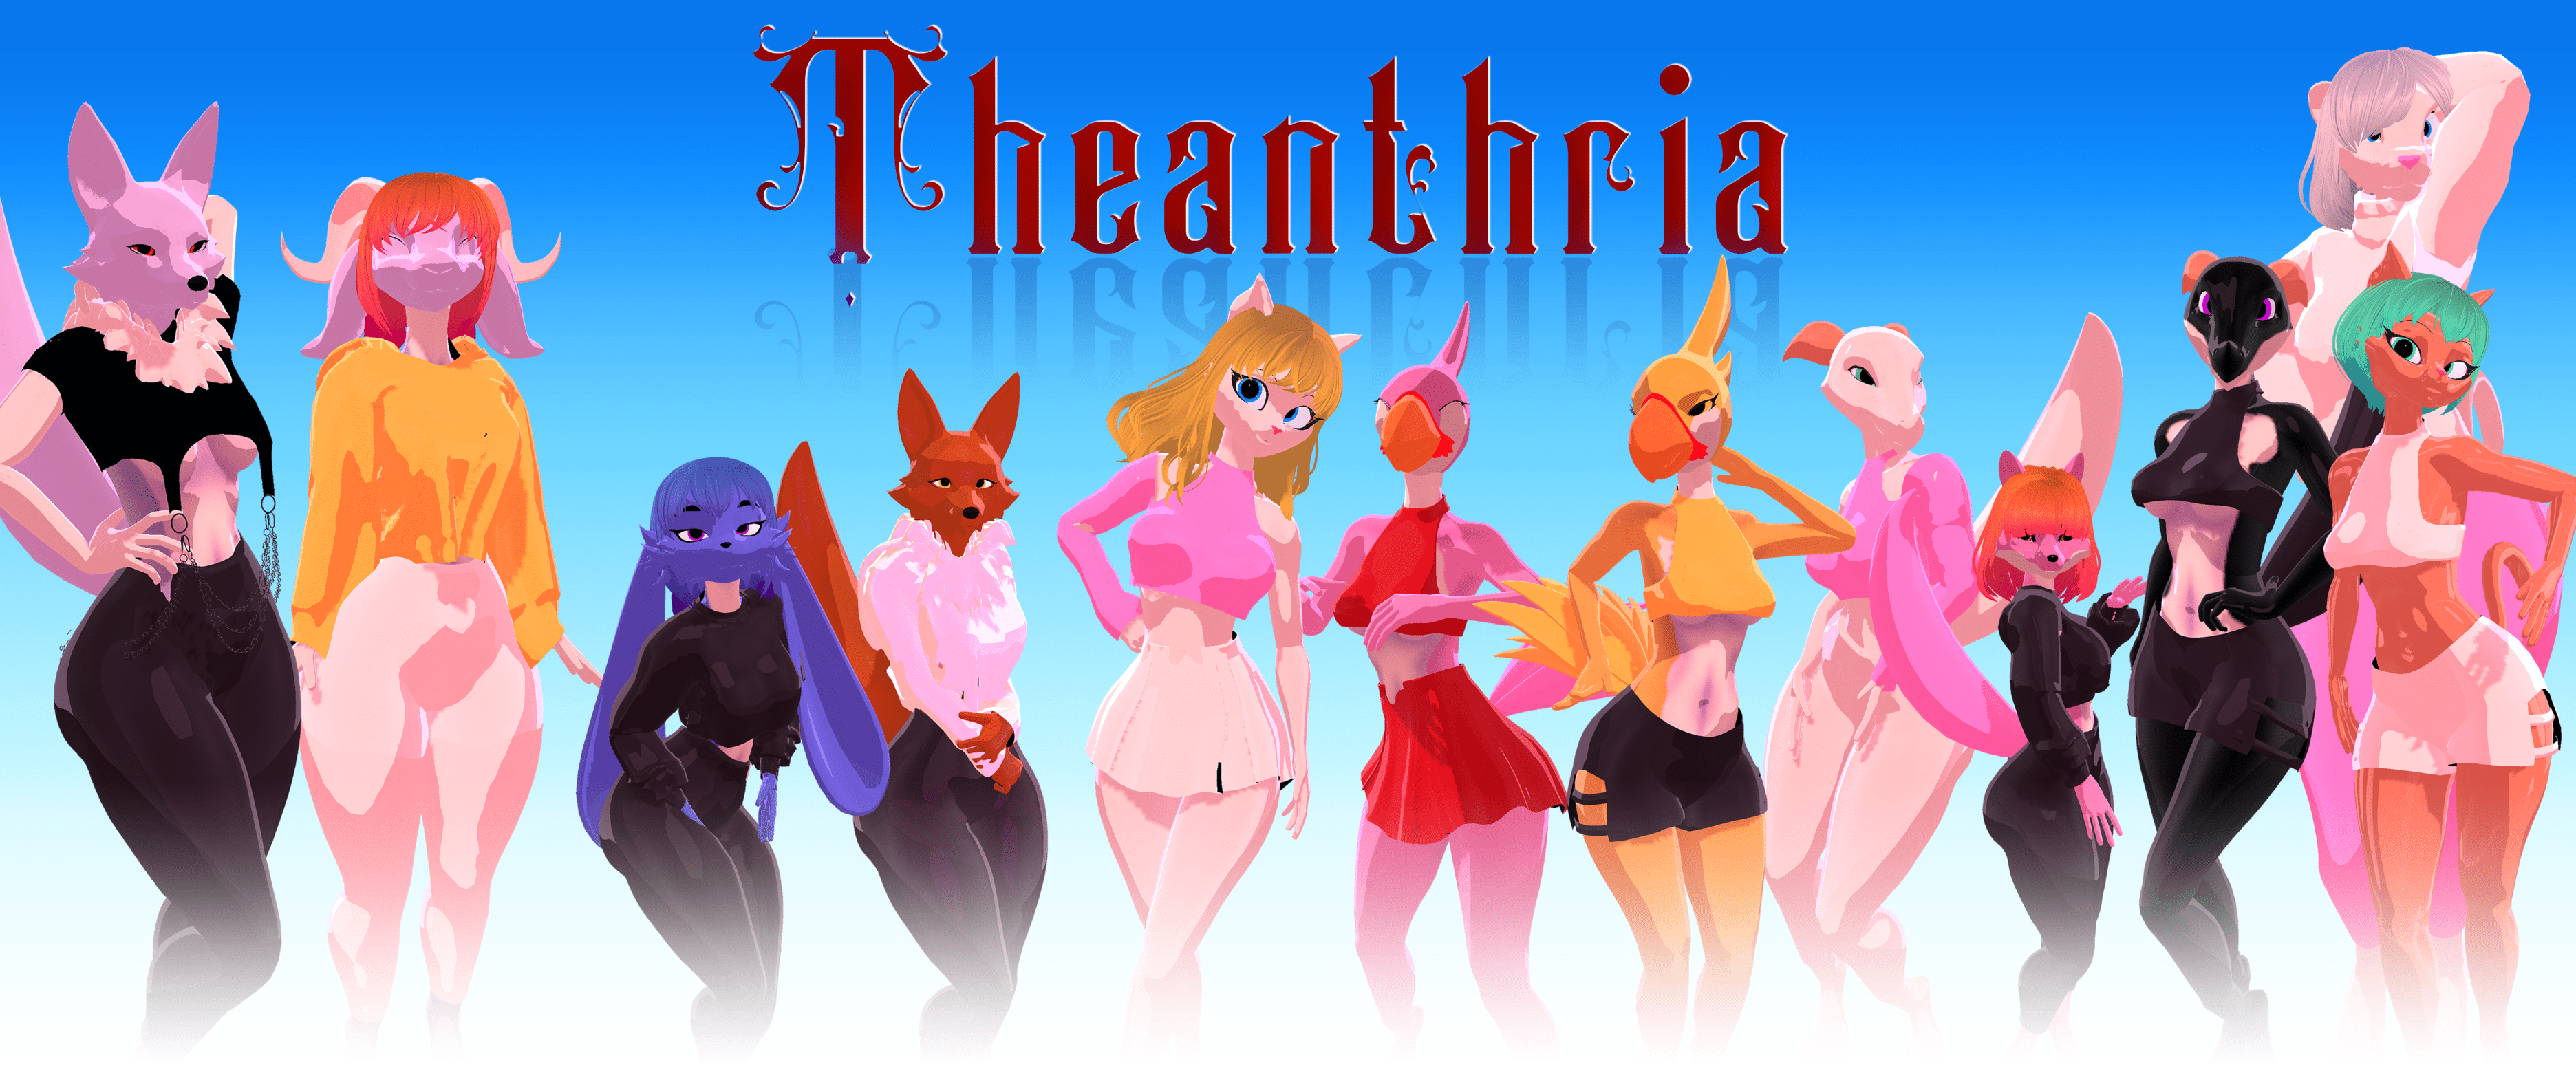 Theanthria